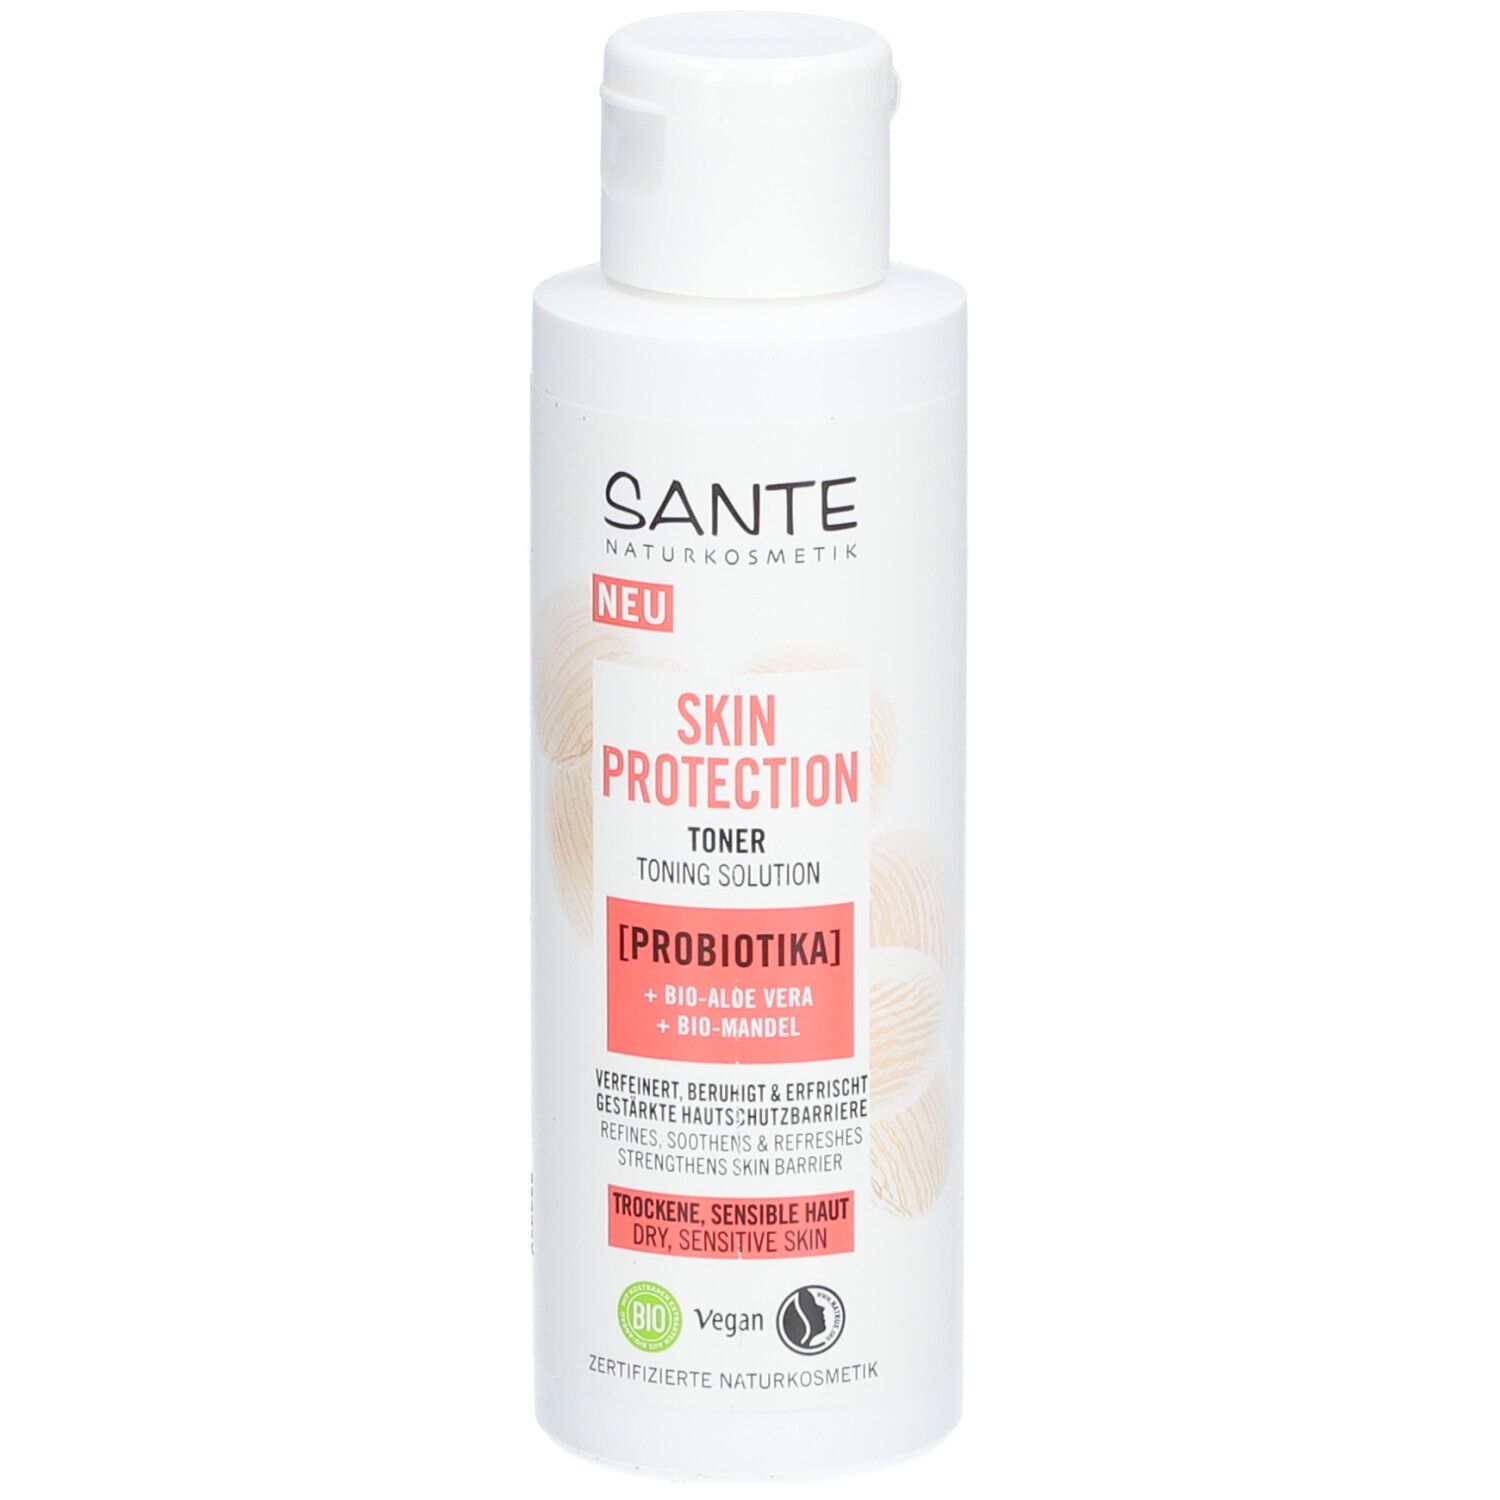 Sante Naturkosmetik Skin Protection Toner Bio-Aloe Vera & Bio-Mandel